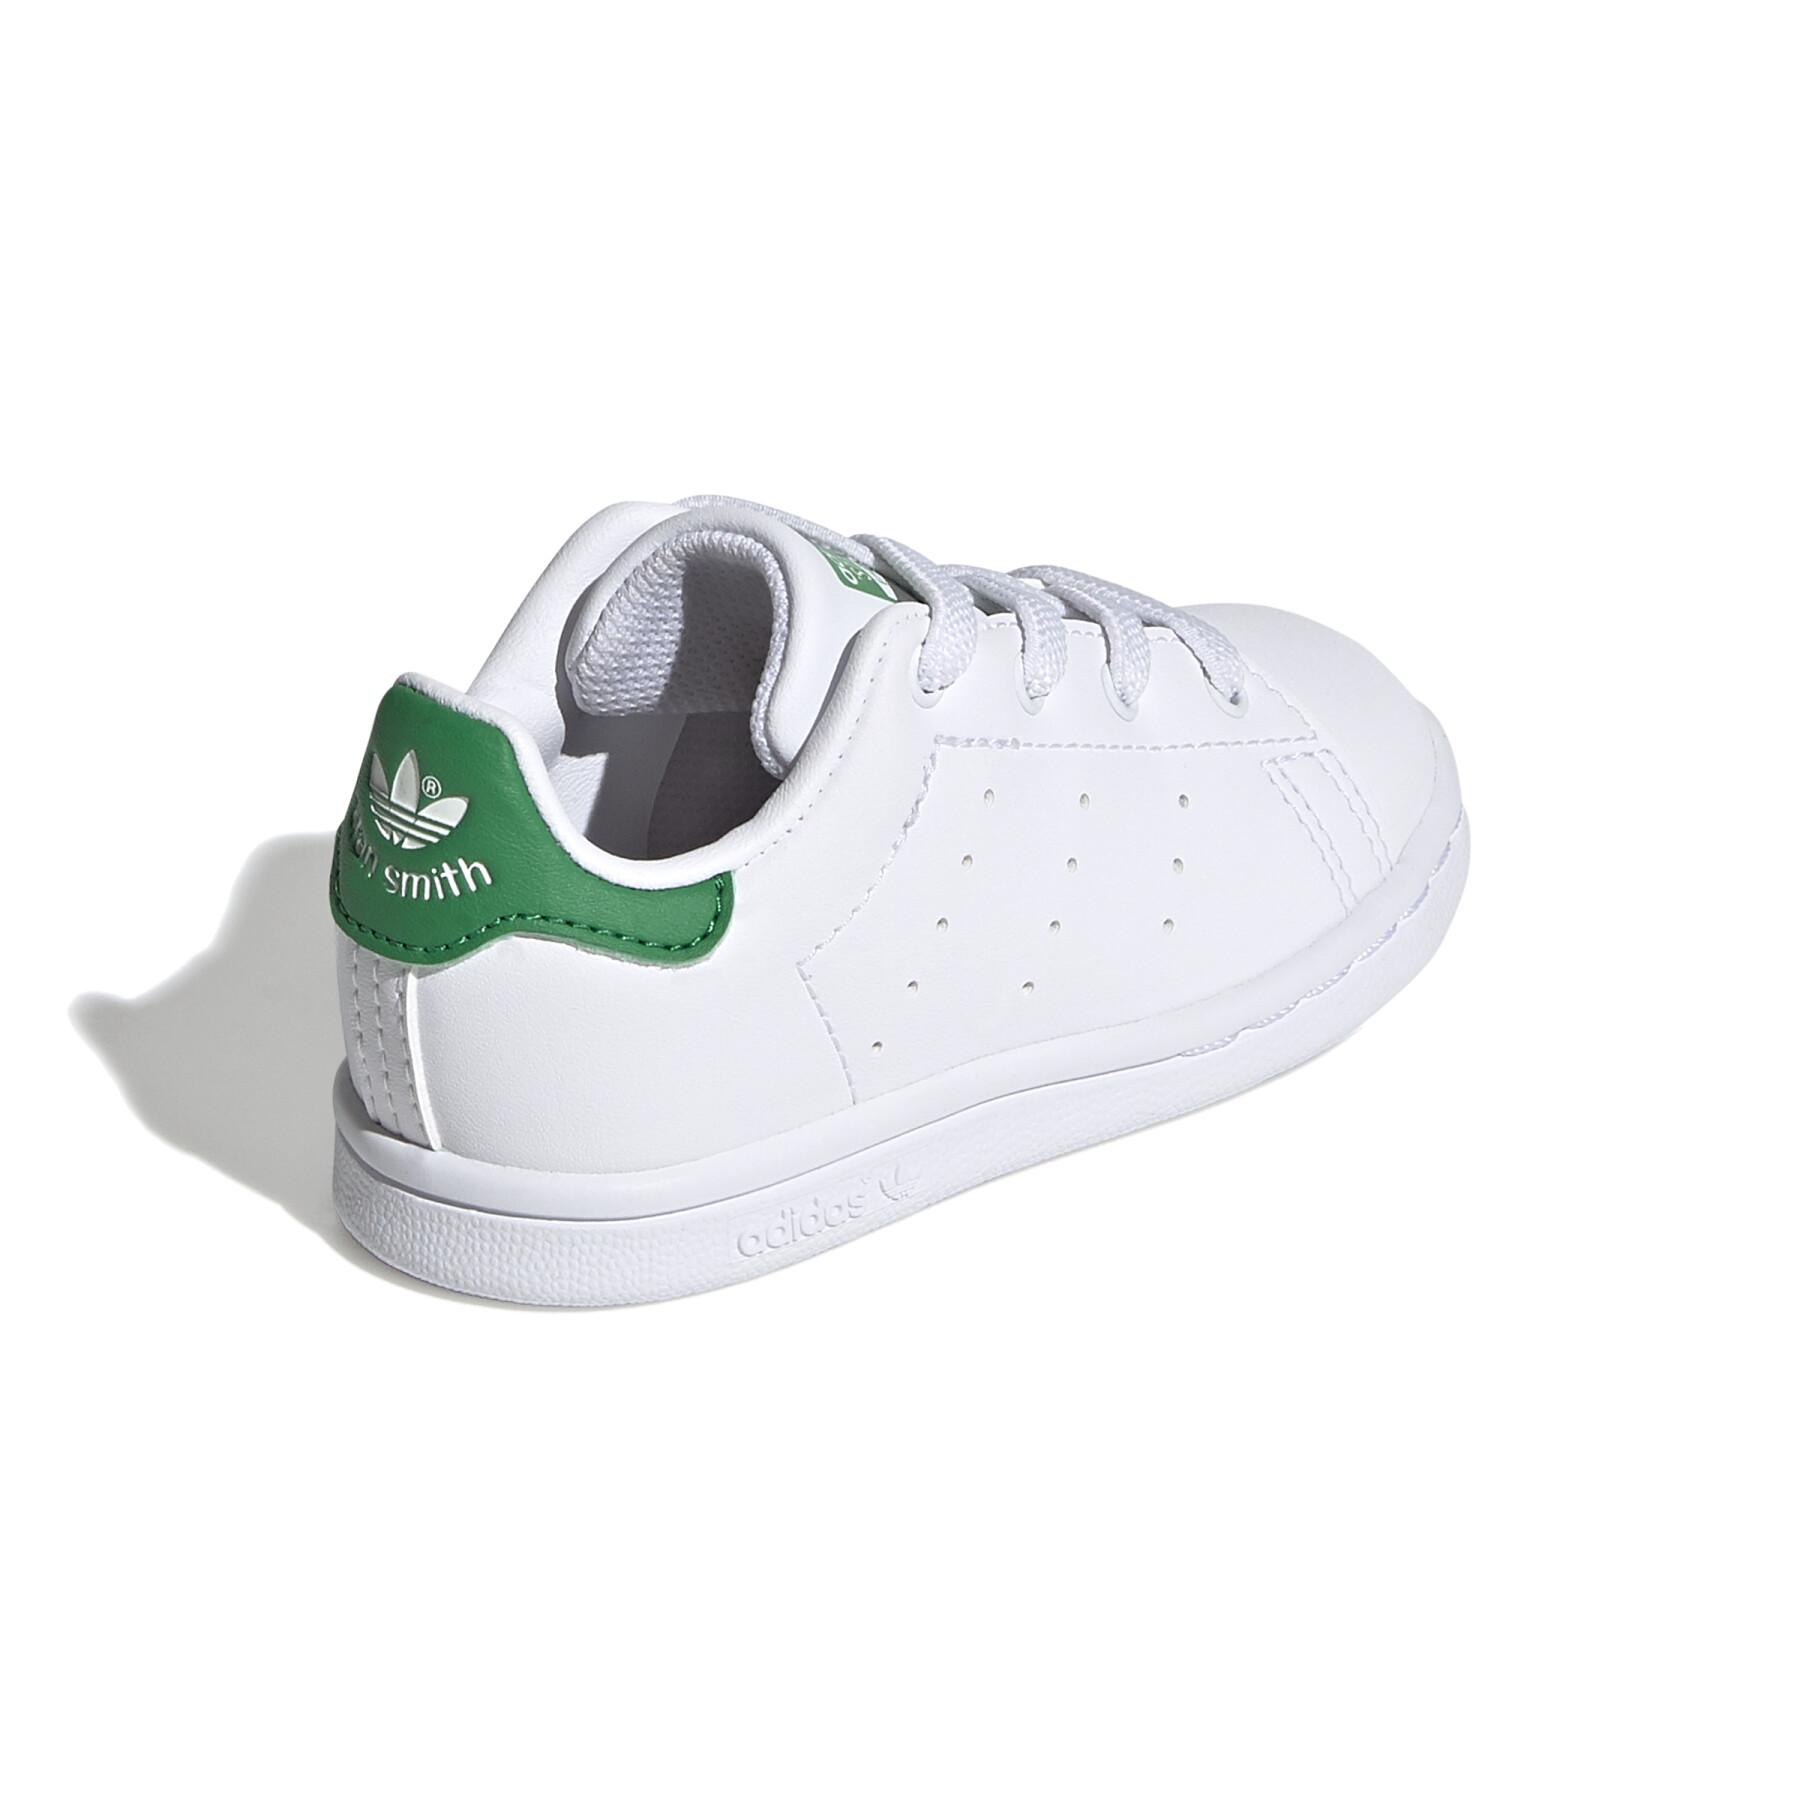 Children's sneakers adidas Originals Stan Smith EL I